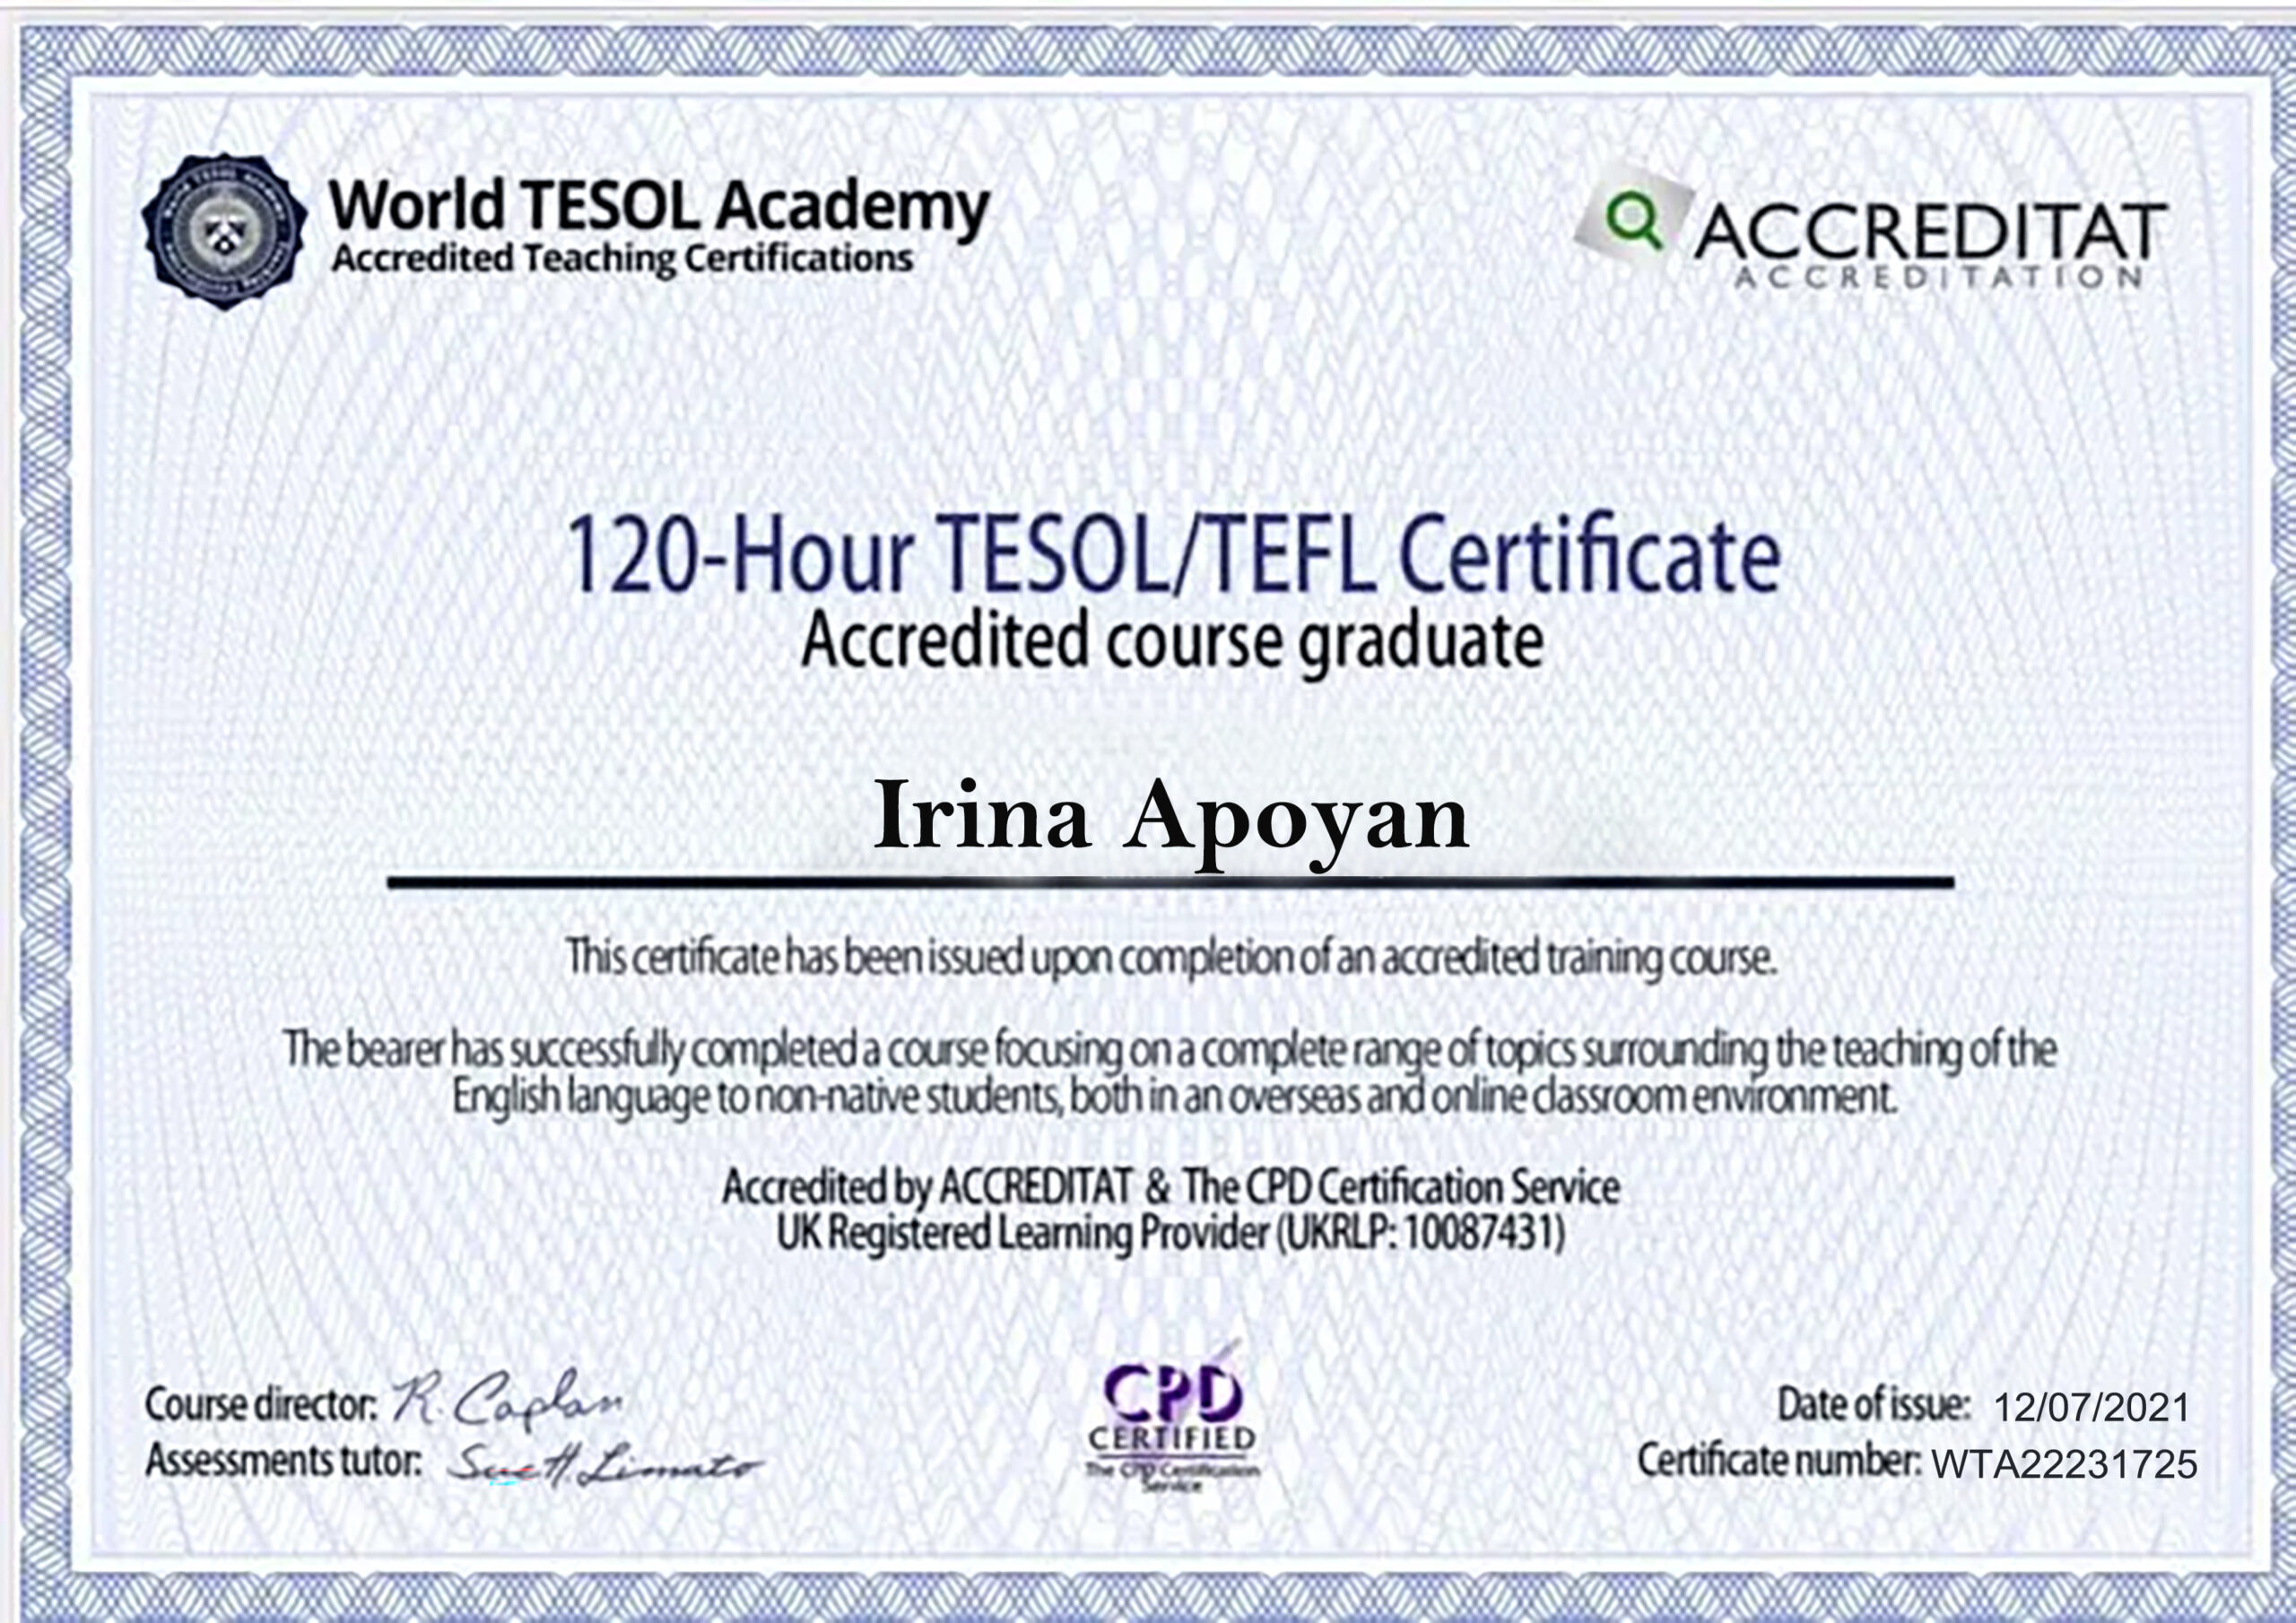 Accreditat TEFL Certificate PSD Template (version 1)